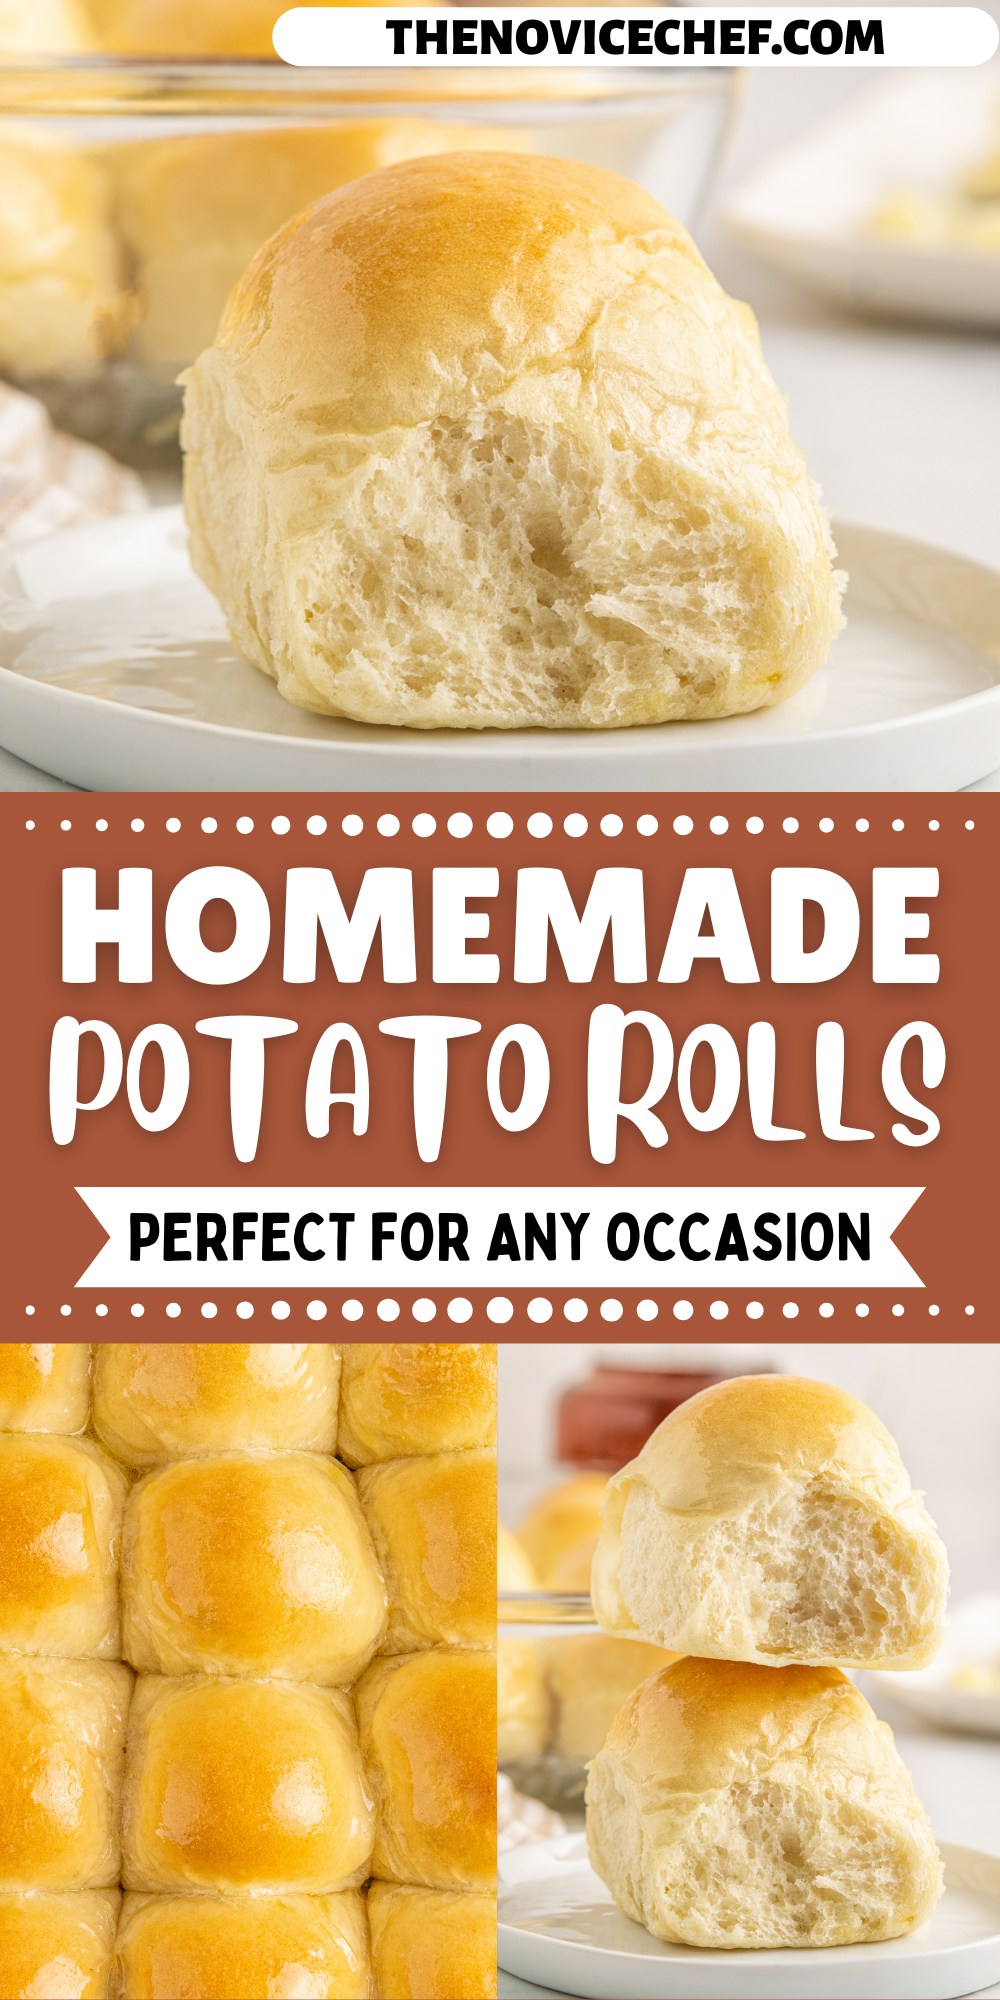 Dinner Potato Rolls Recipe | The Novice Chef